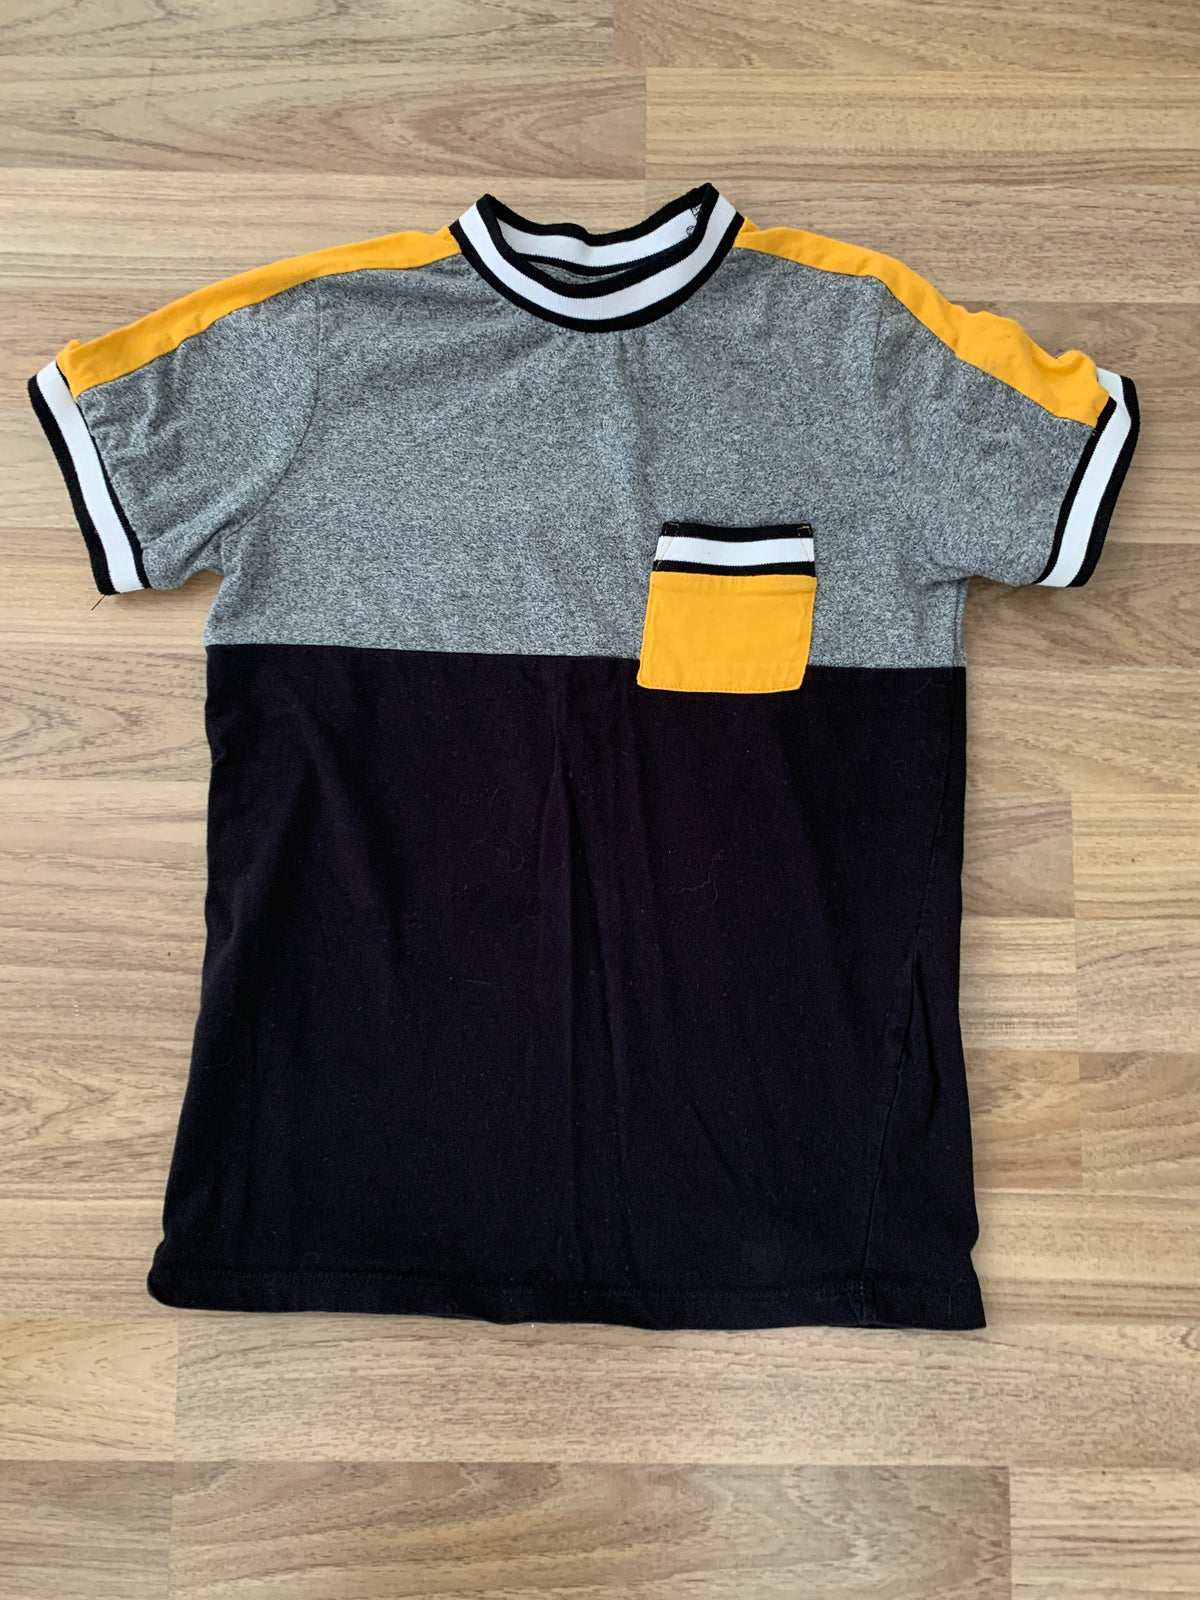 Short Sleeve Top (Girls Size 10-12)